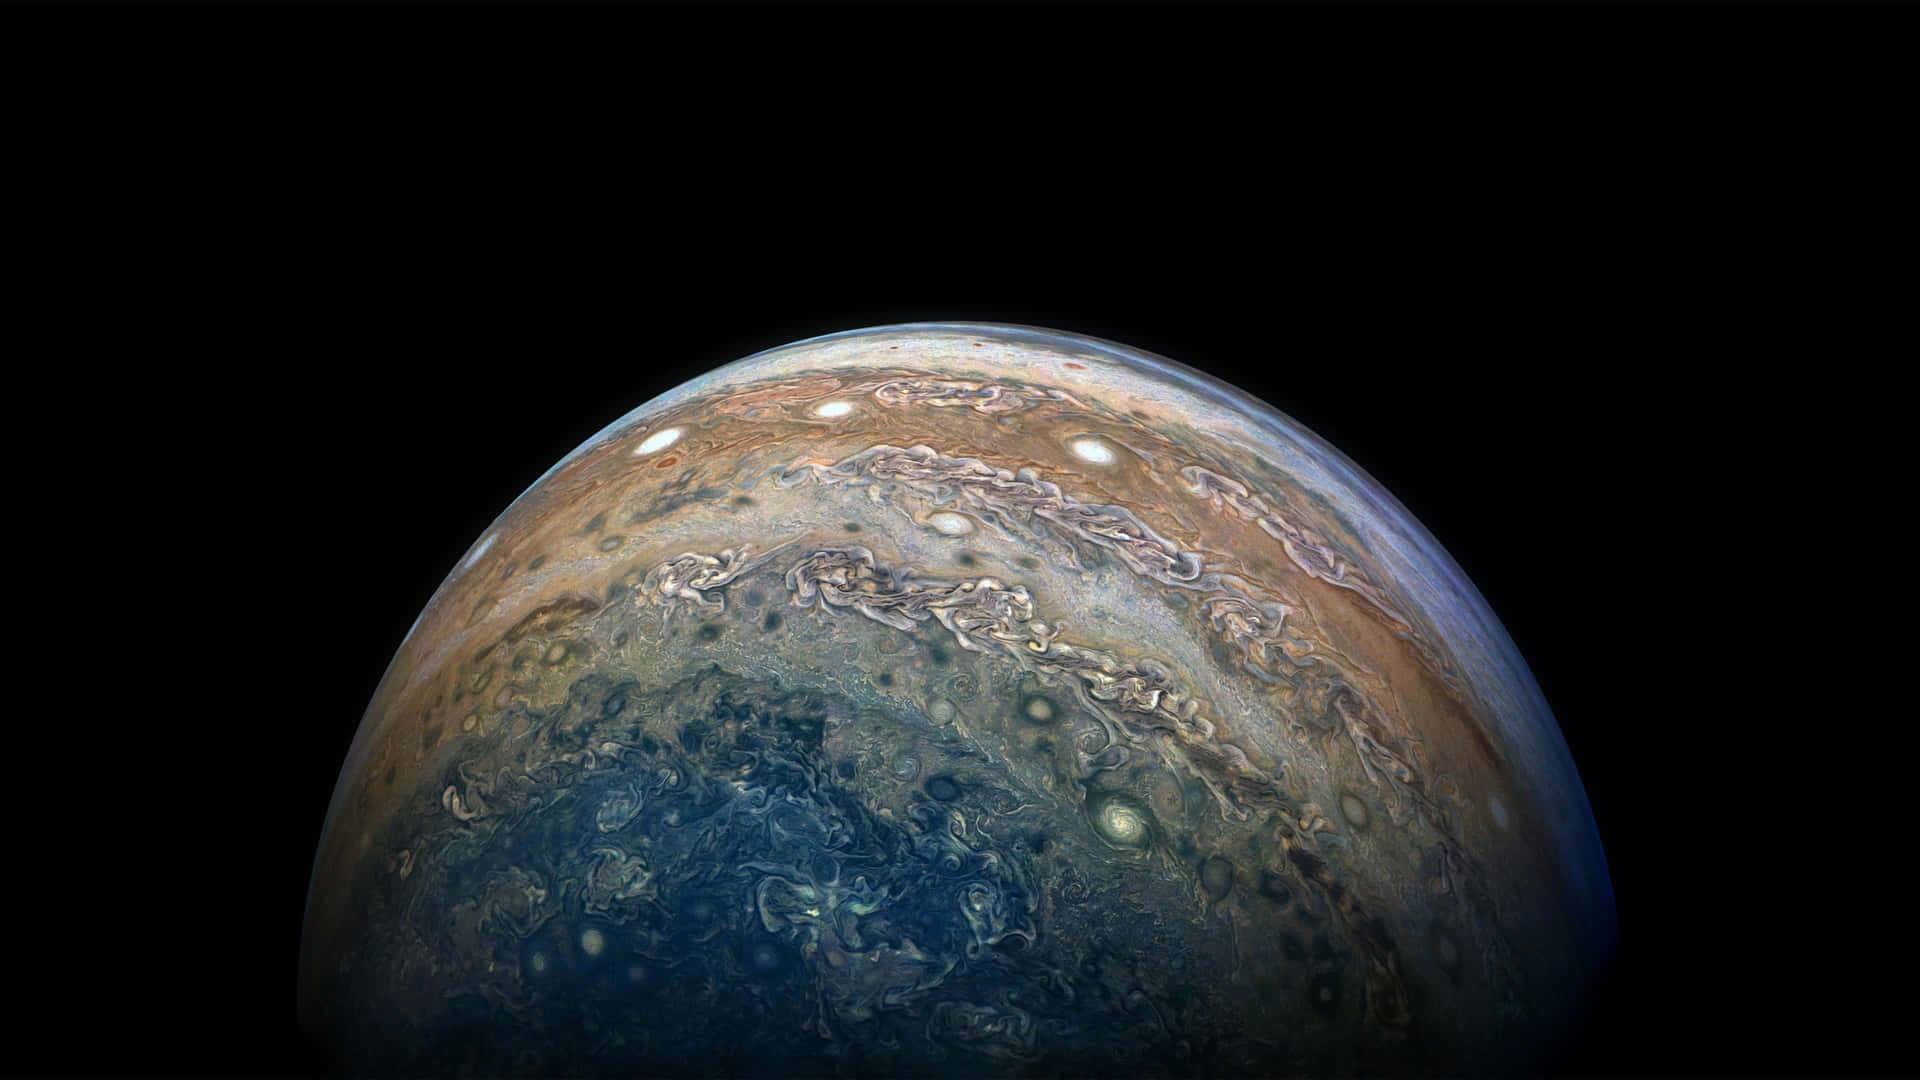 "The dazzling beauty of Jupiter"